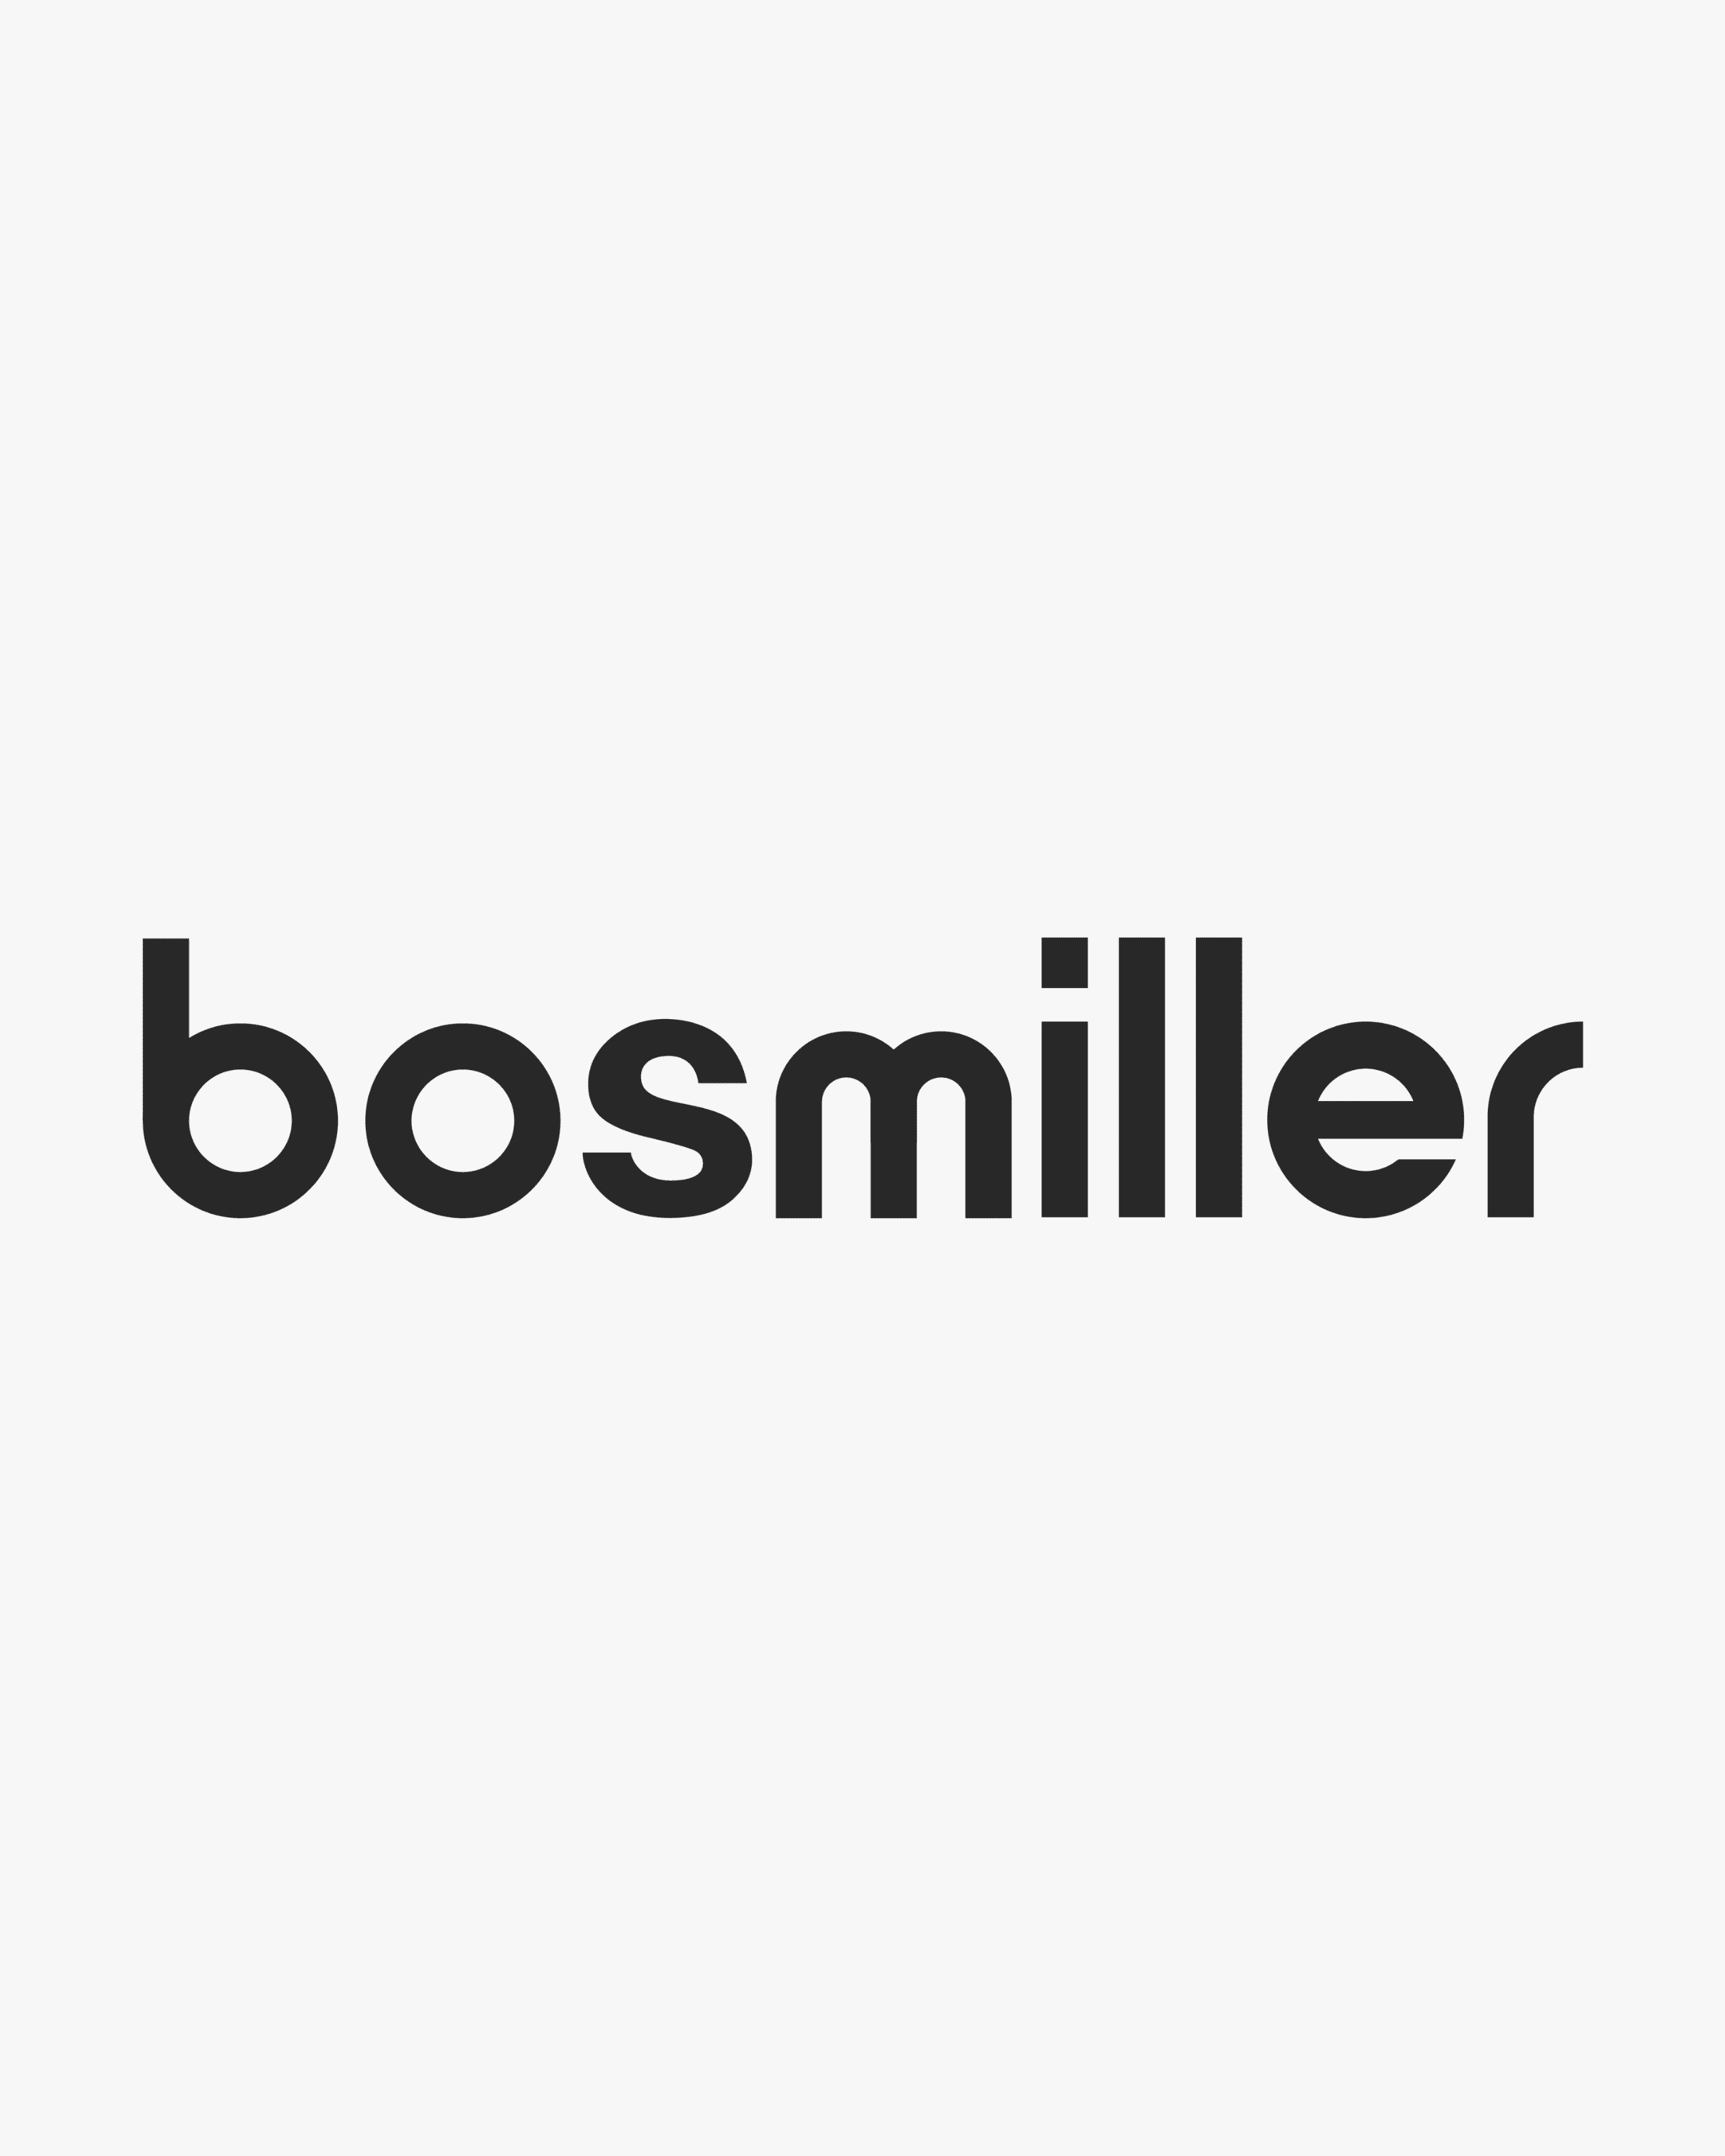 2023 Events PC Banner - Bosmiller